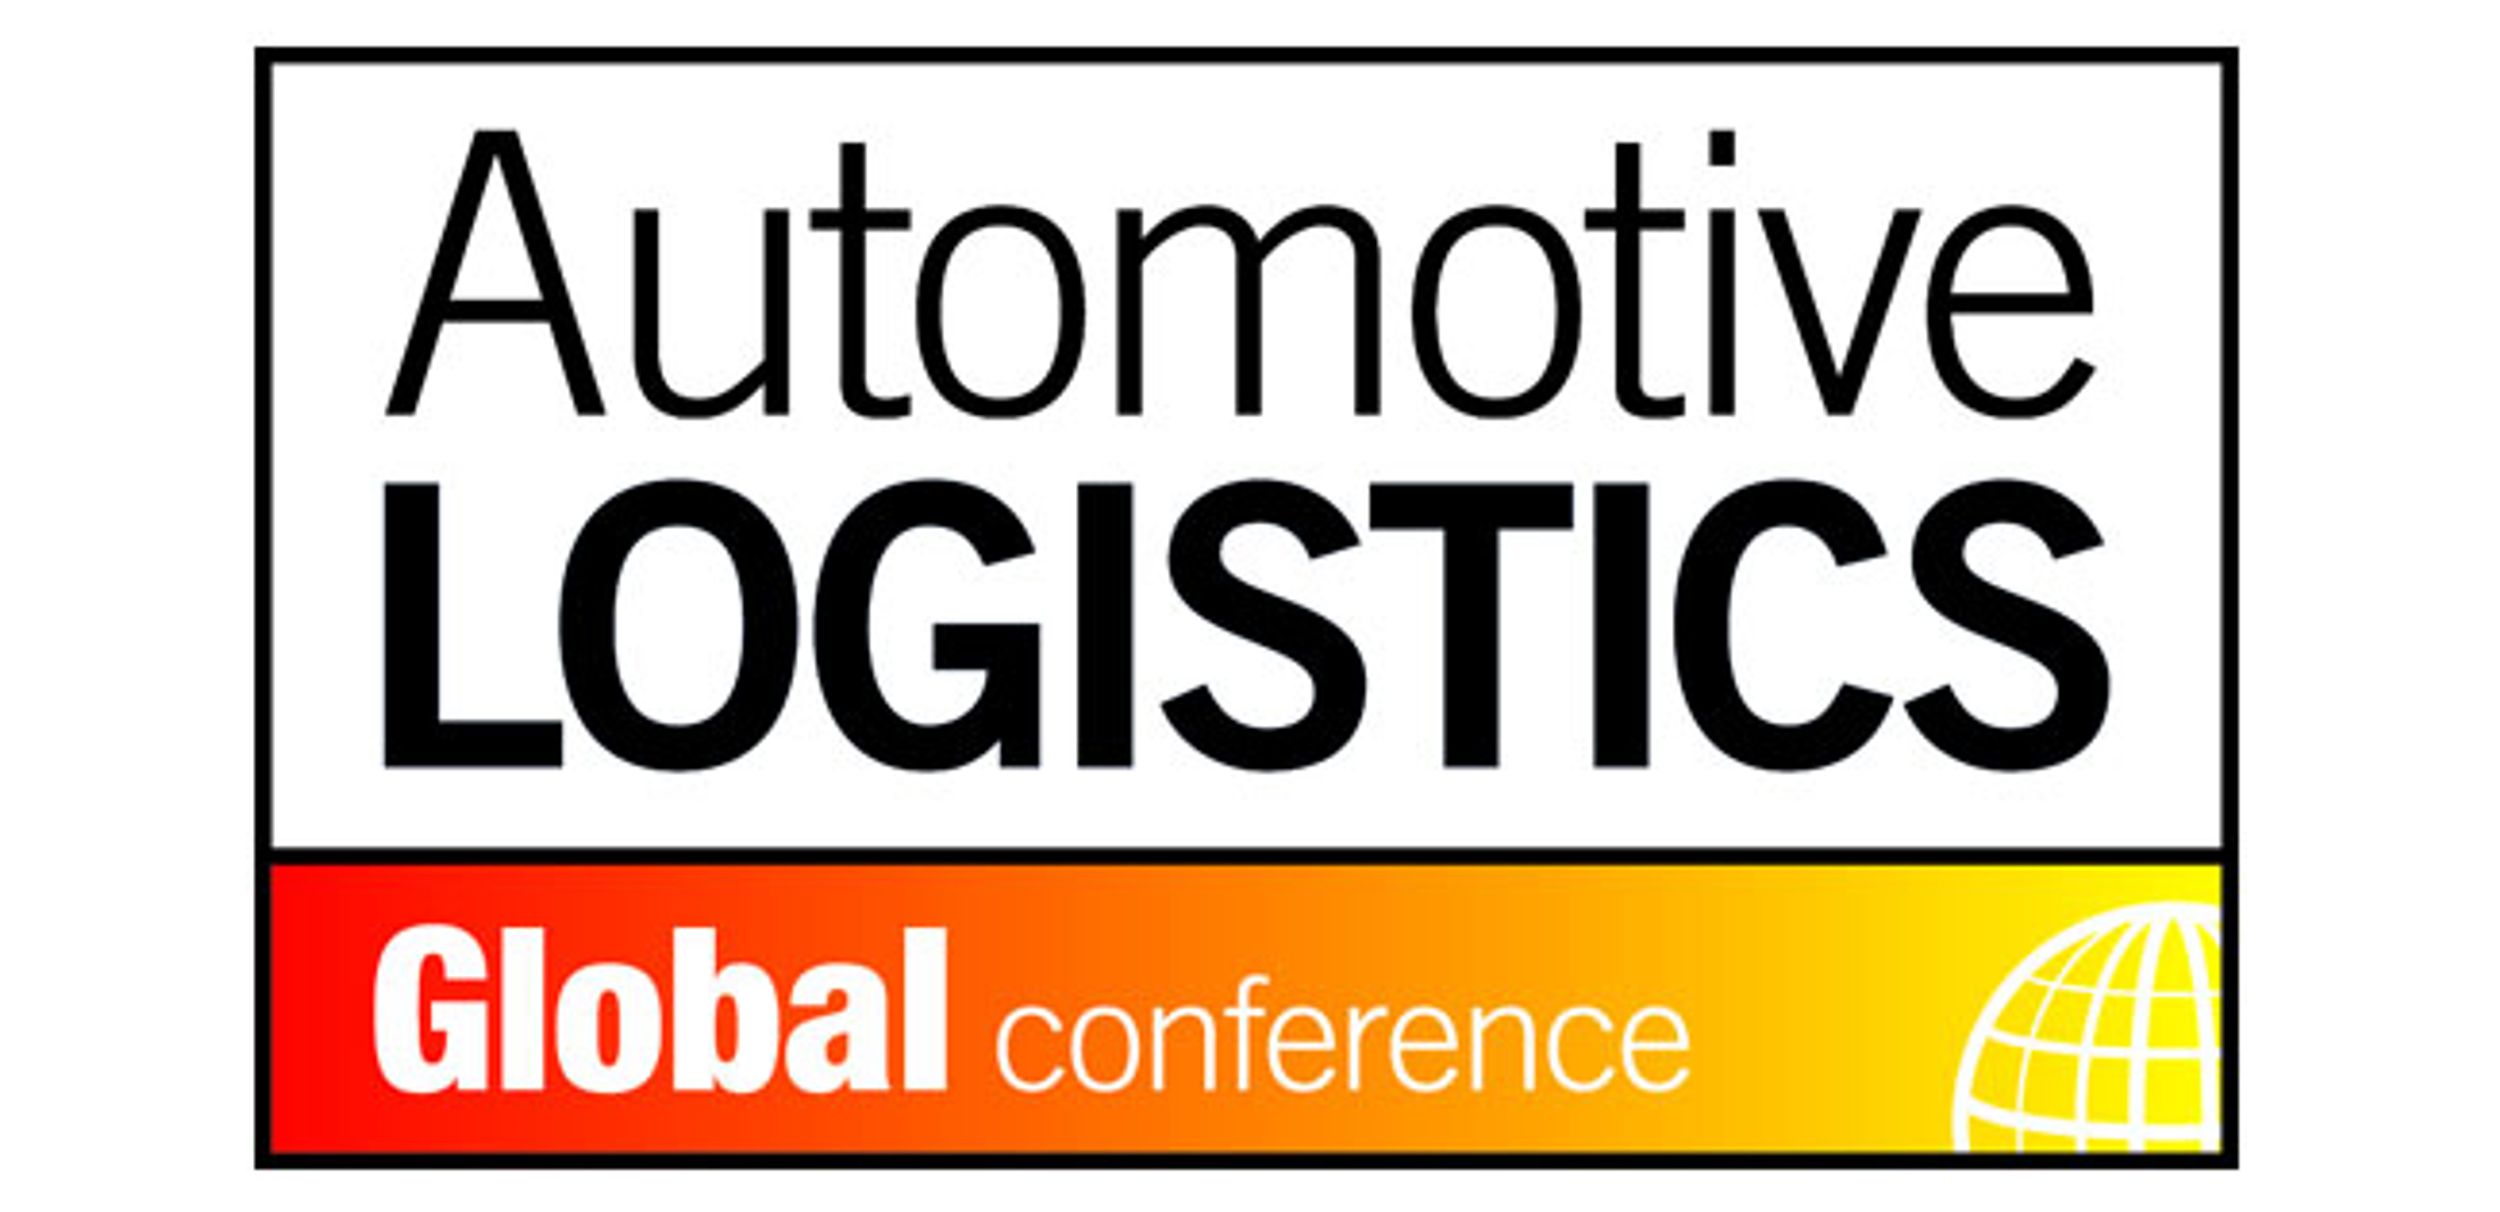 Penske Logistics and Novelis to Participate on Panel at Automotive Logistics Global Conference